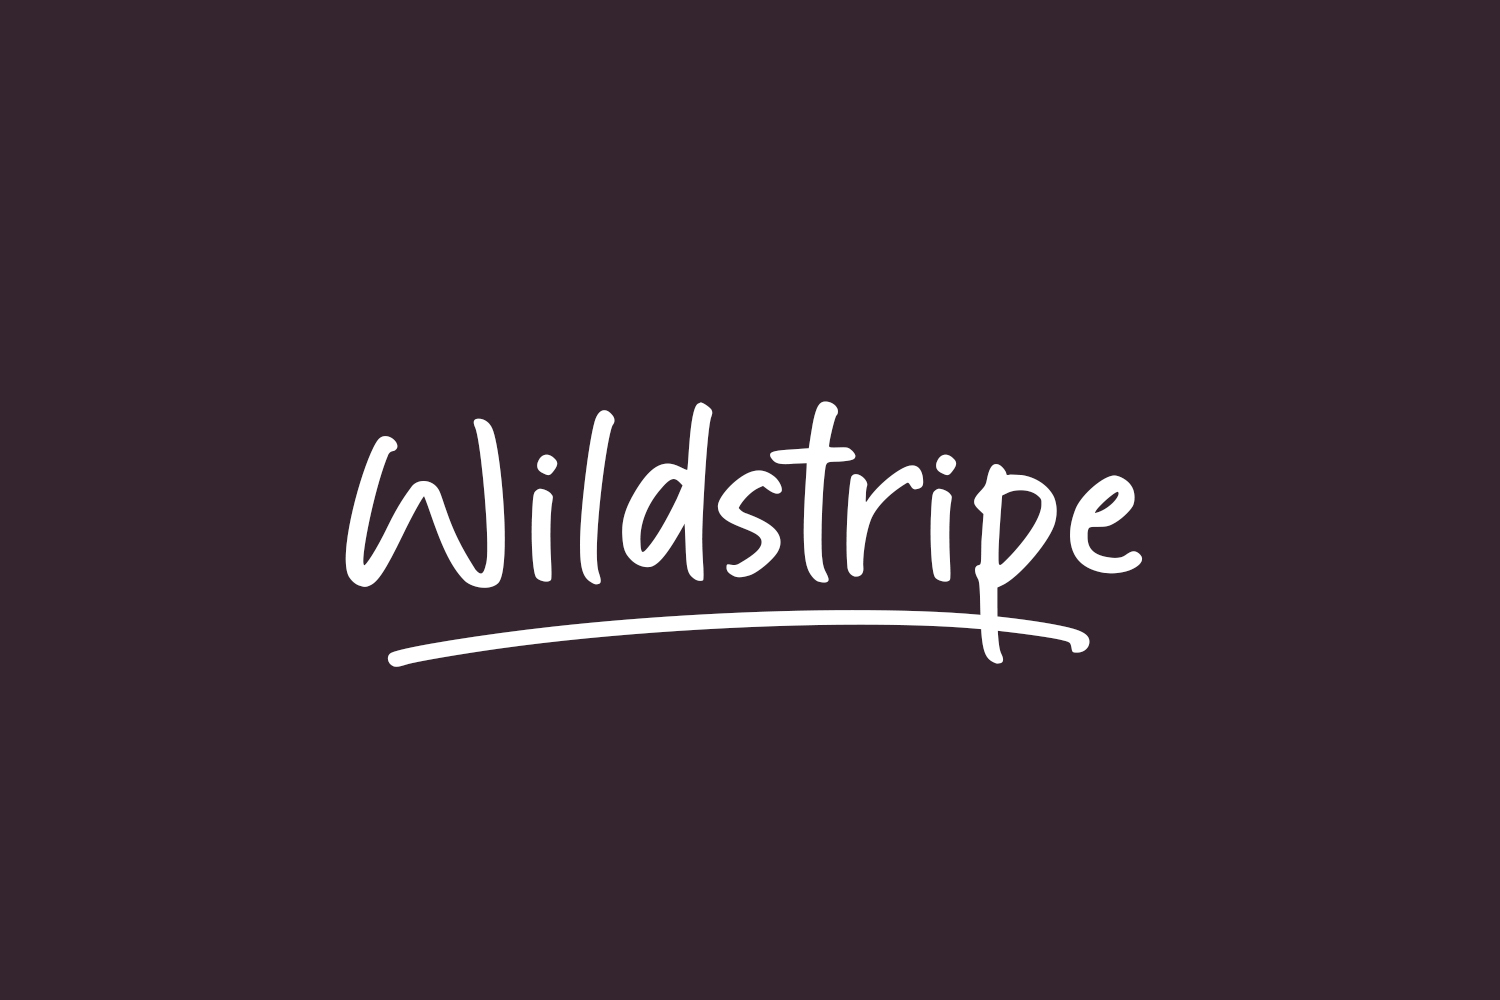 Wildstripe Free Font